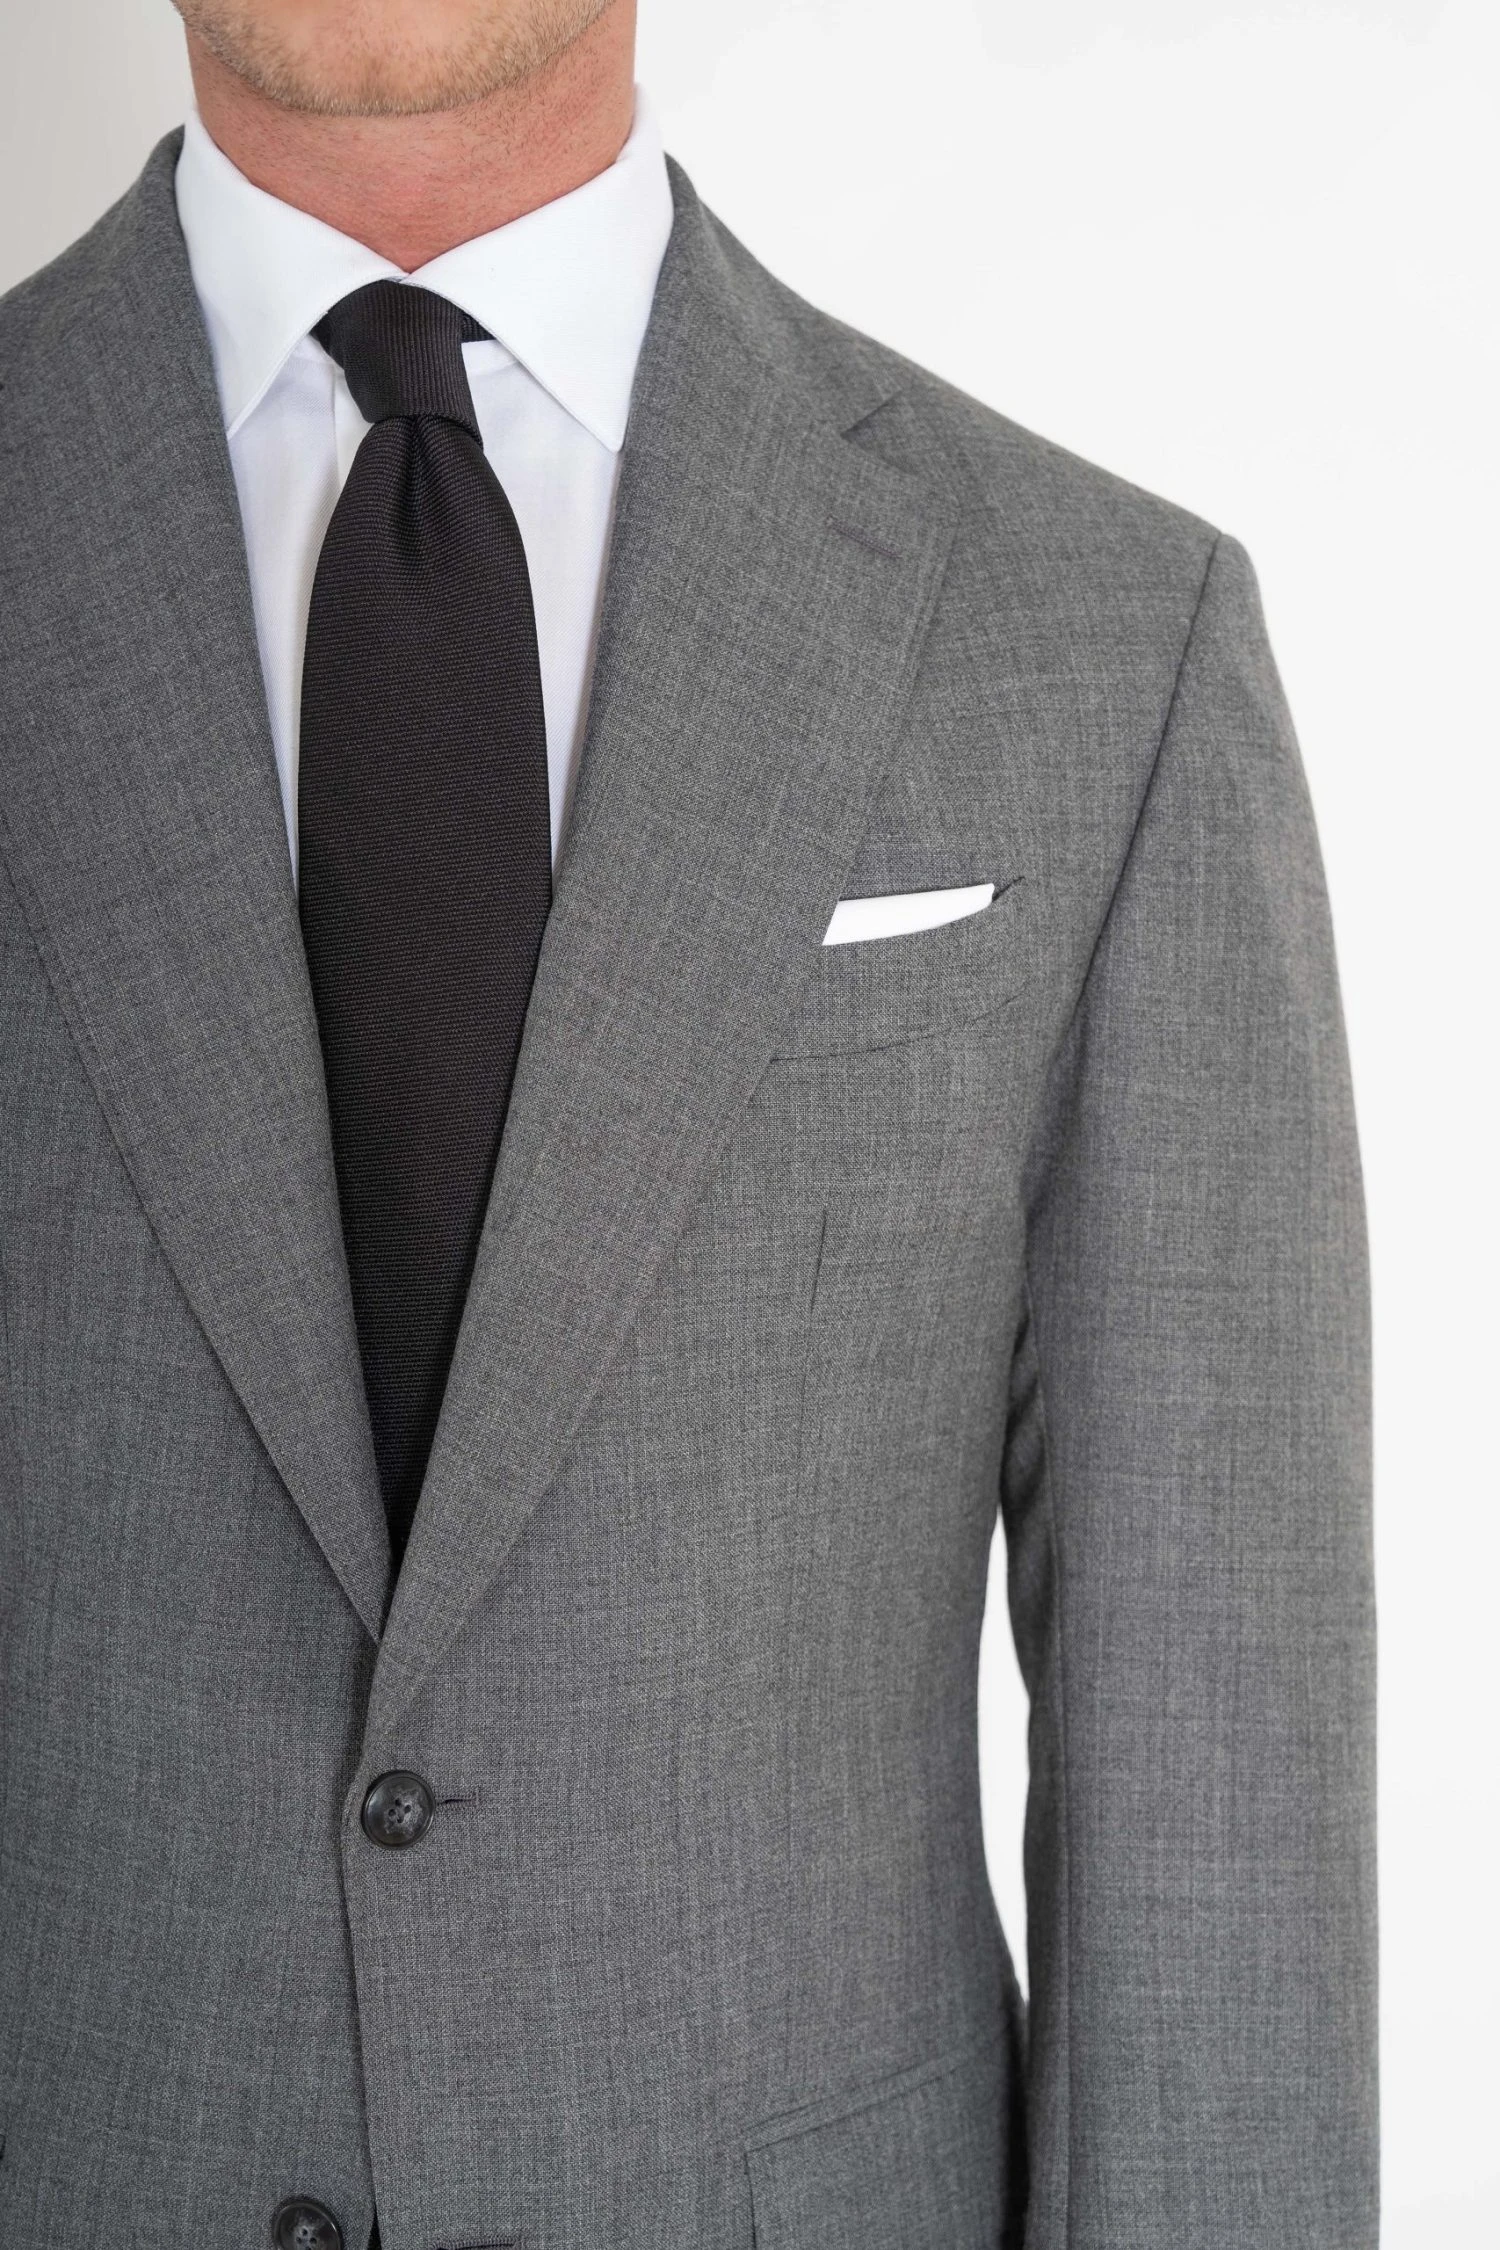 Medium Grey TwistAir Suit with olive green tie